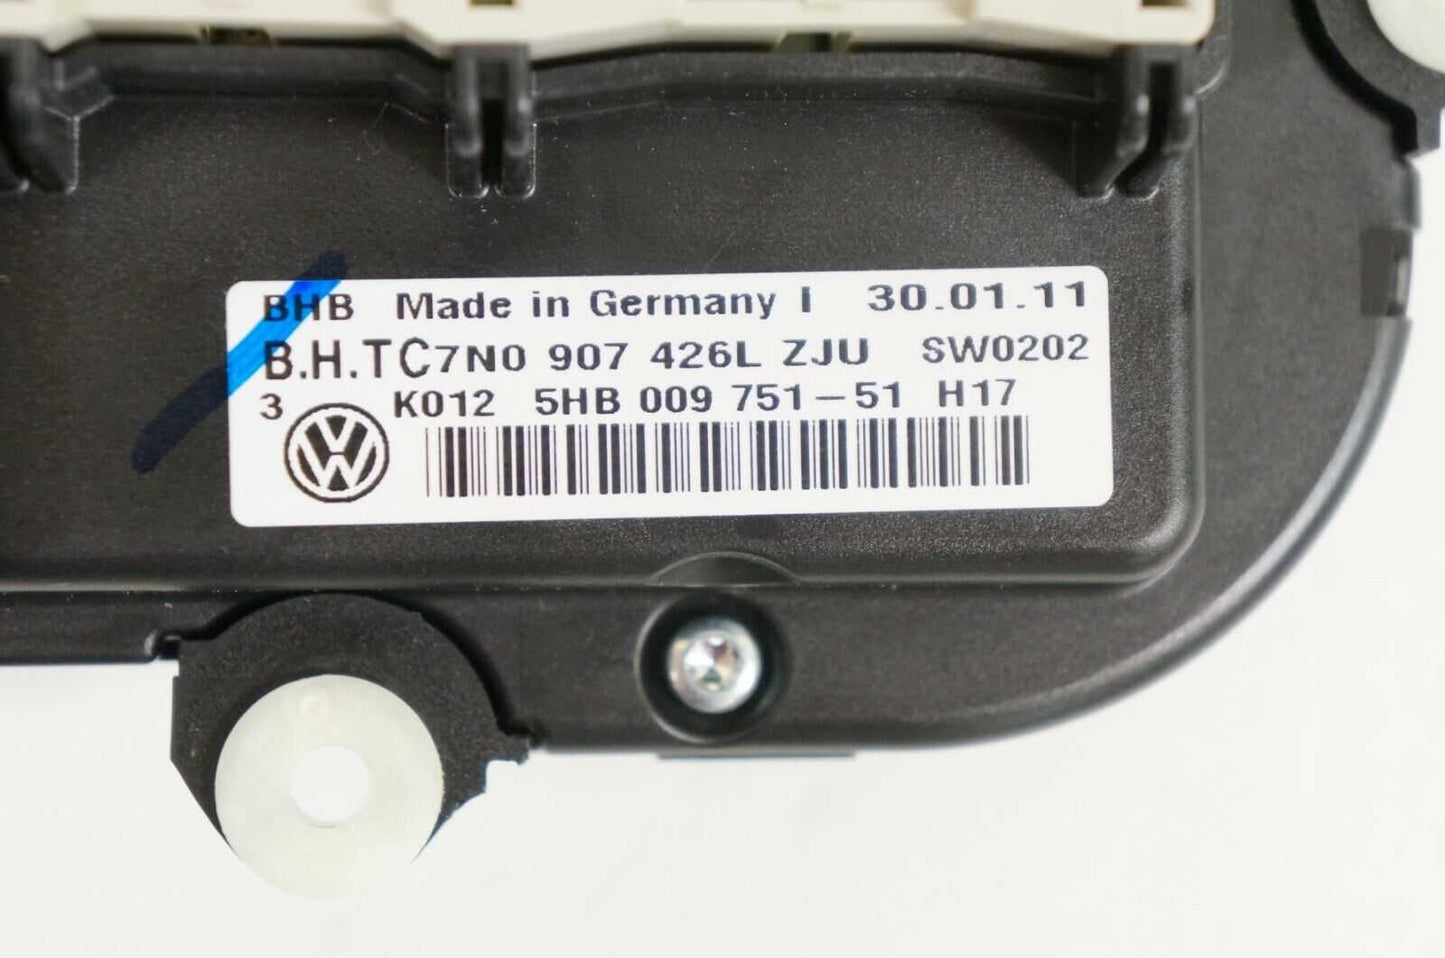 11-14 Volkswagen Jetta Golf Heat A/C Temperature Climate Control OEM 5HB 009 751 Alshned Auto Parts